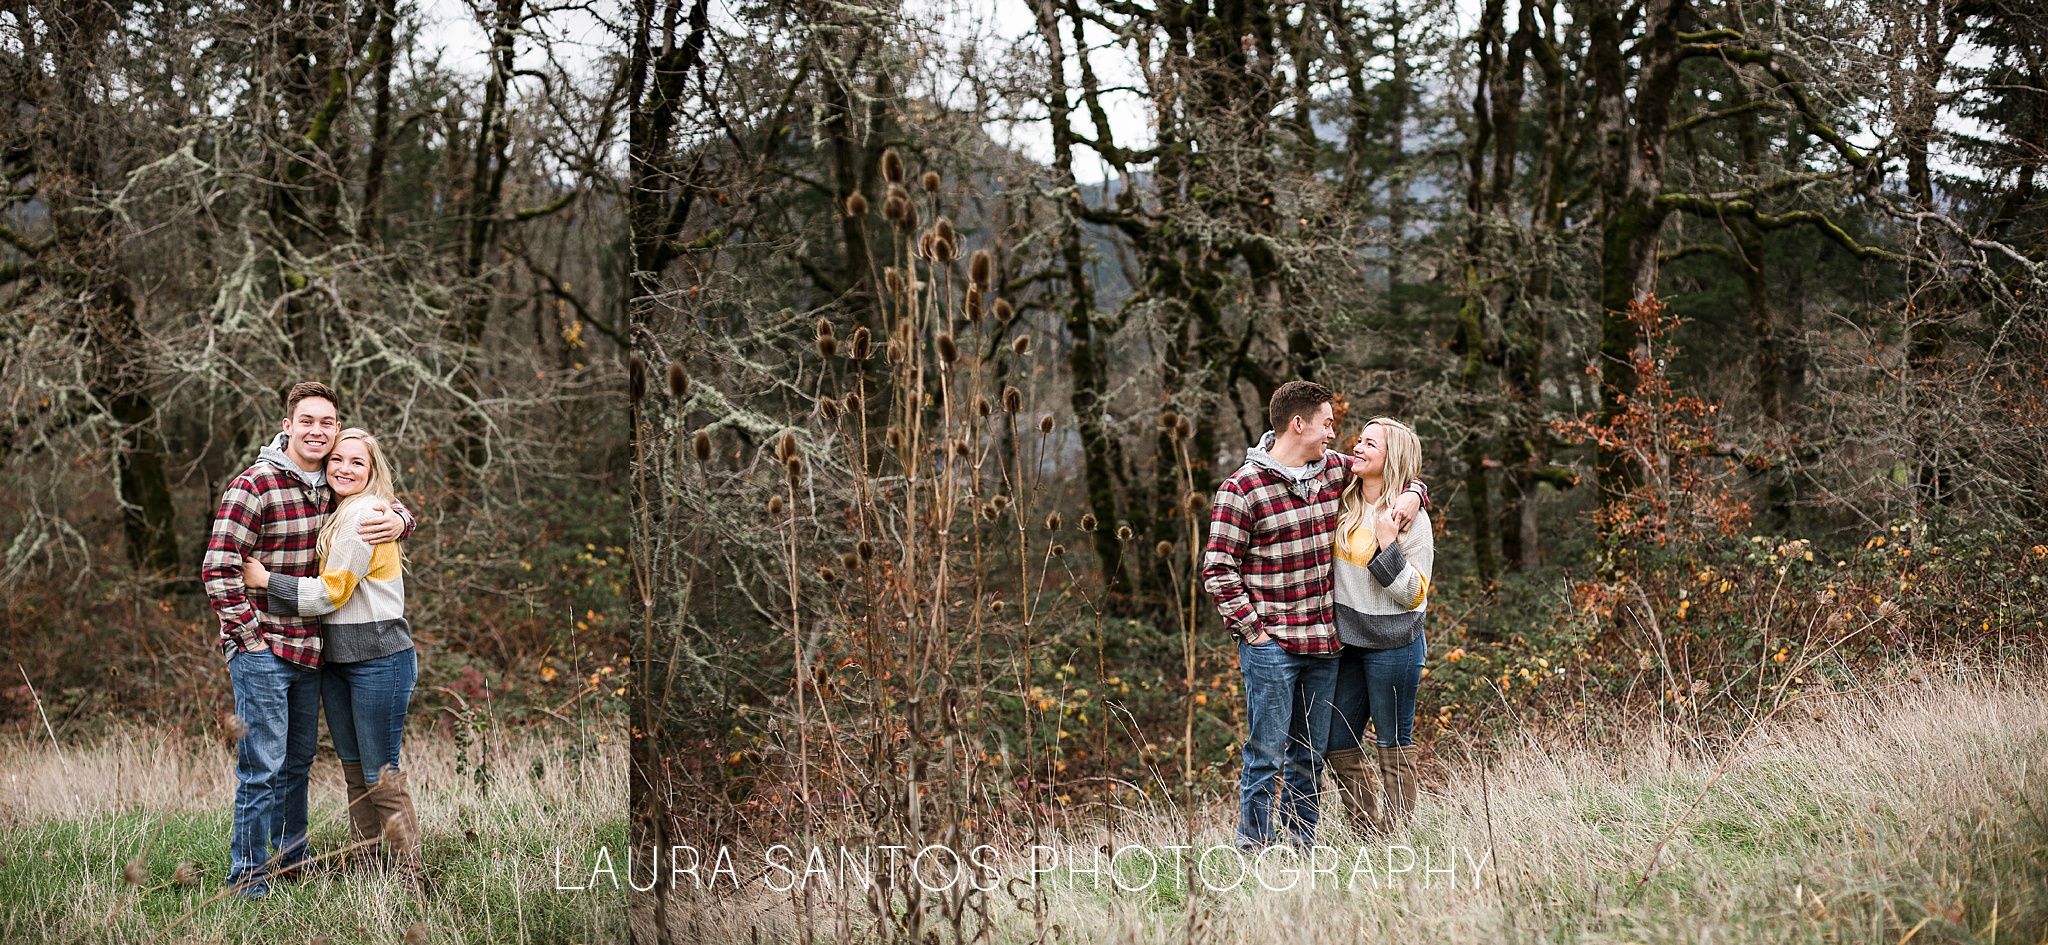 Laura Santos Photography Portland Oregon Family Photographer_0563.jpg